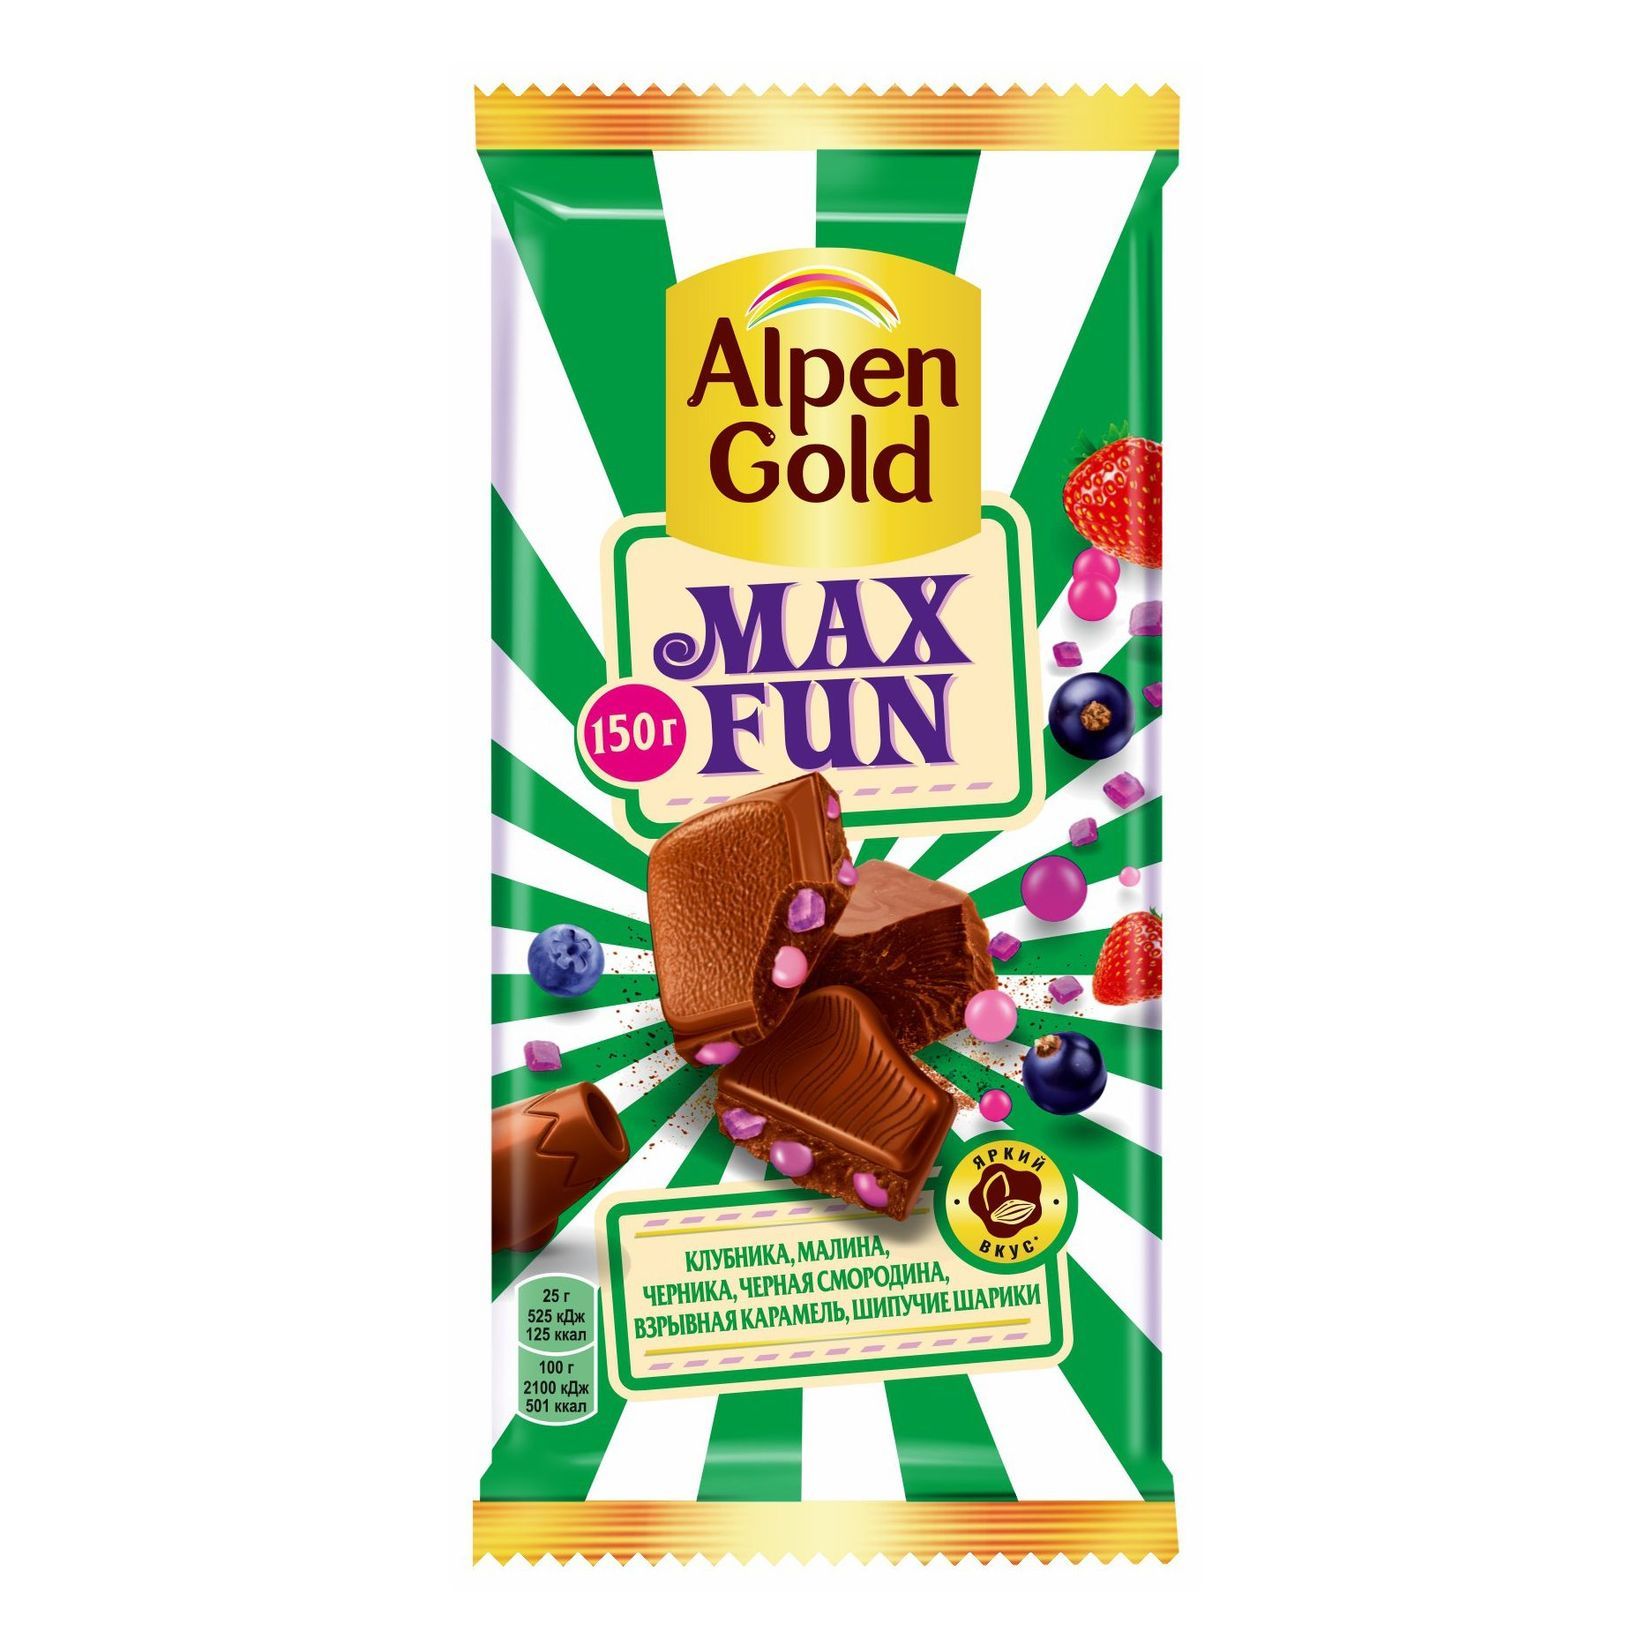 Alpen Gold Max fun